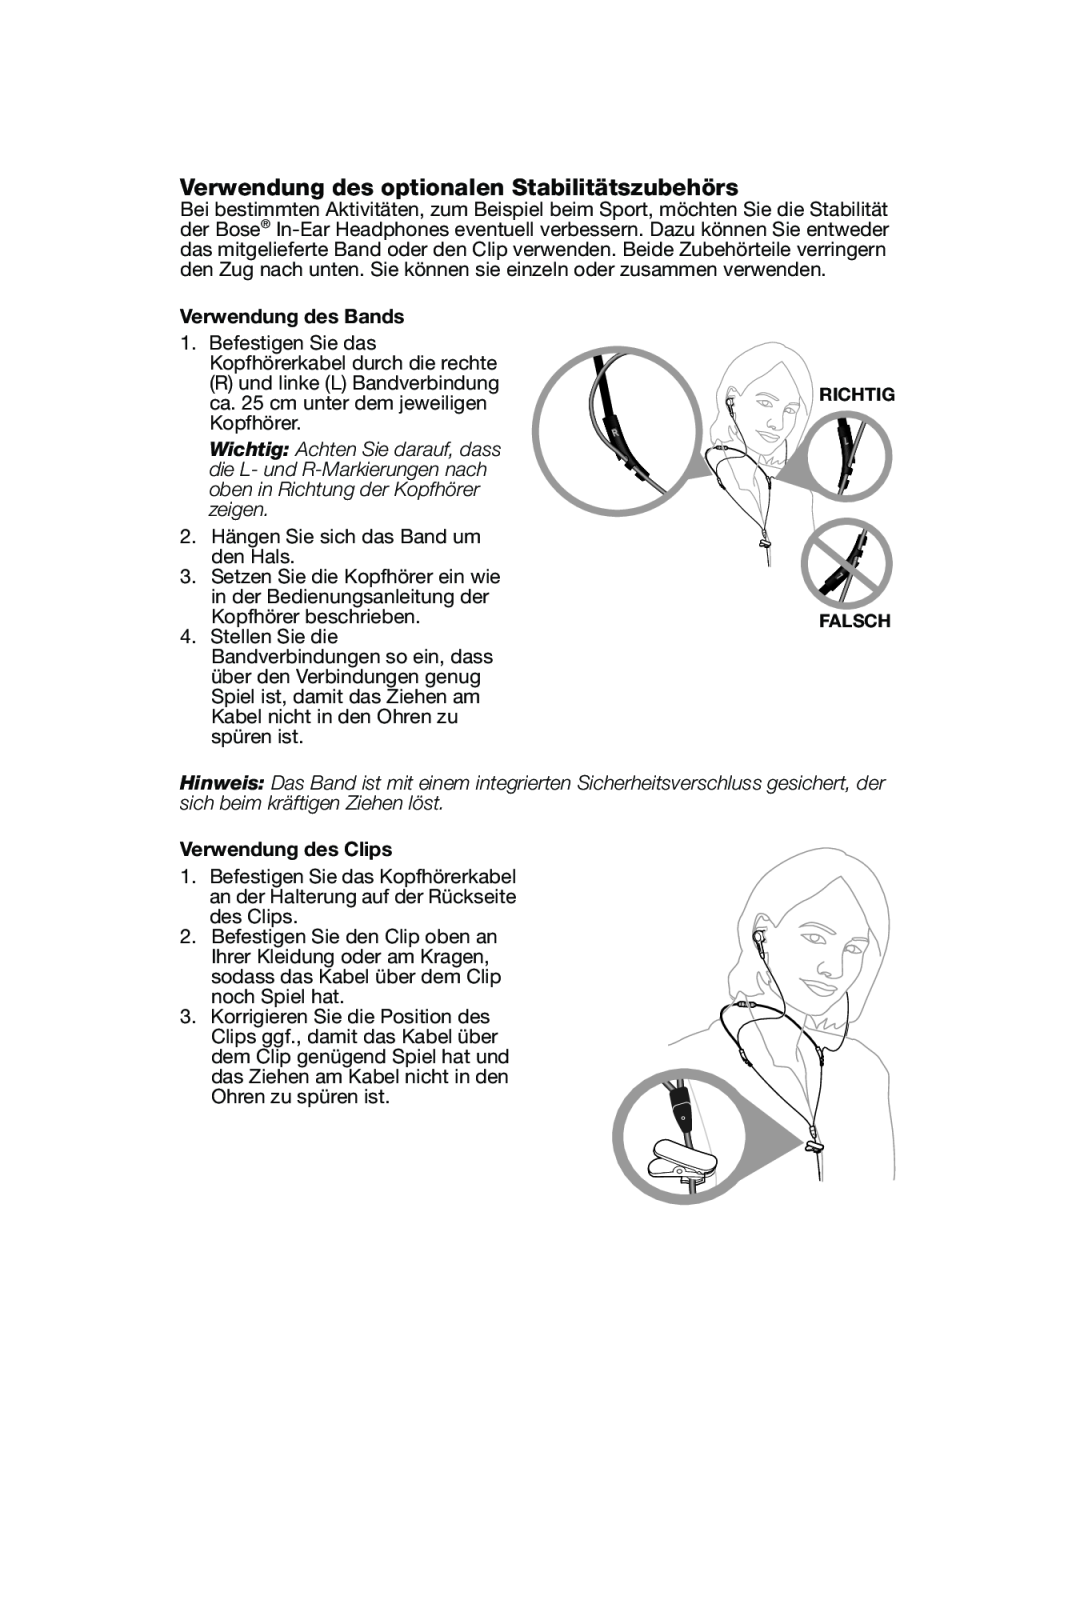 Bose In-Ear Headphones manual Verwendung des optionalen Stabilitätszubehörs, Verwendung des Bands, Verwendung des Clips 